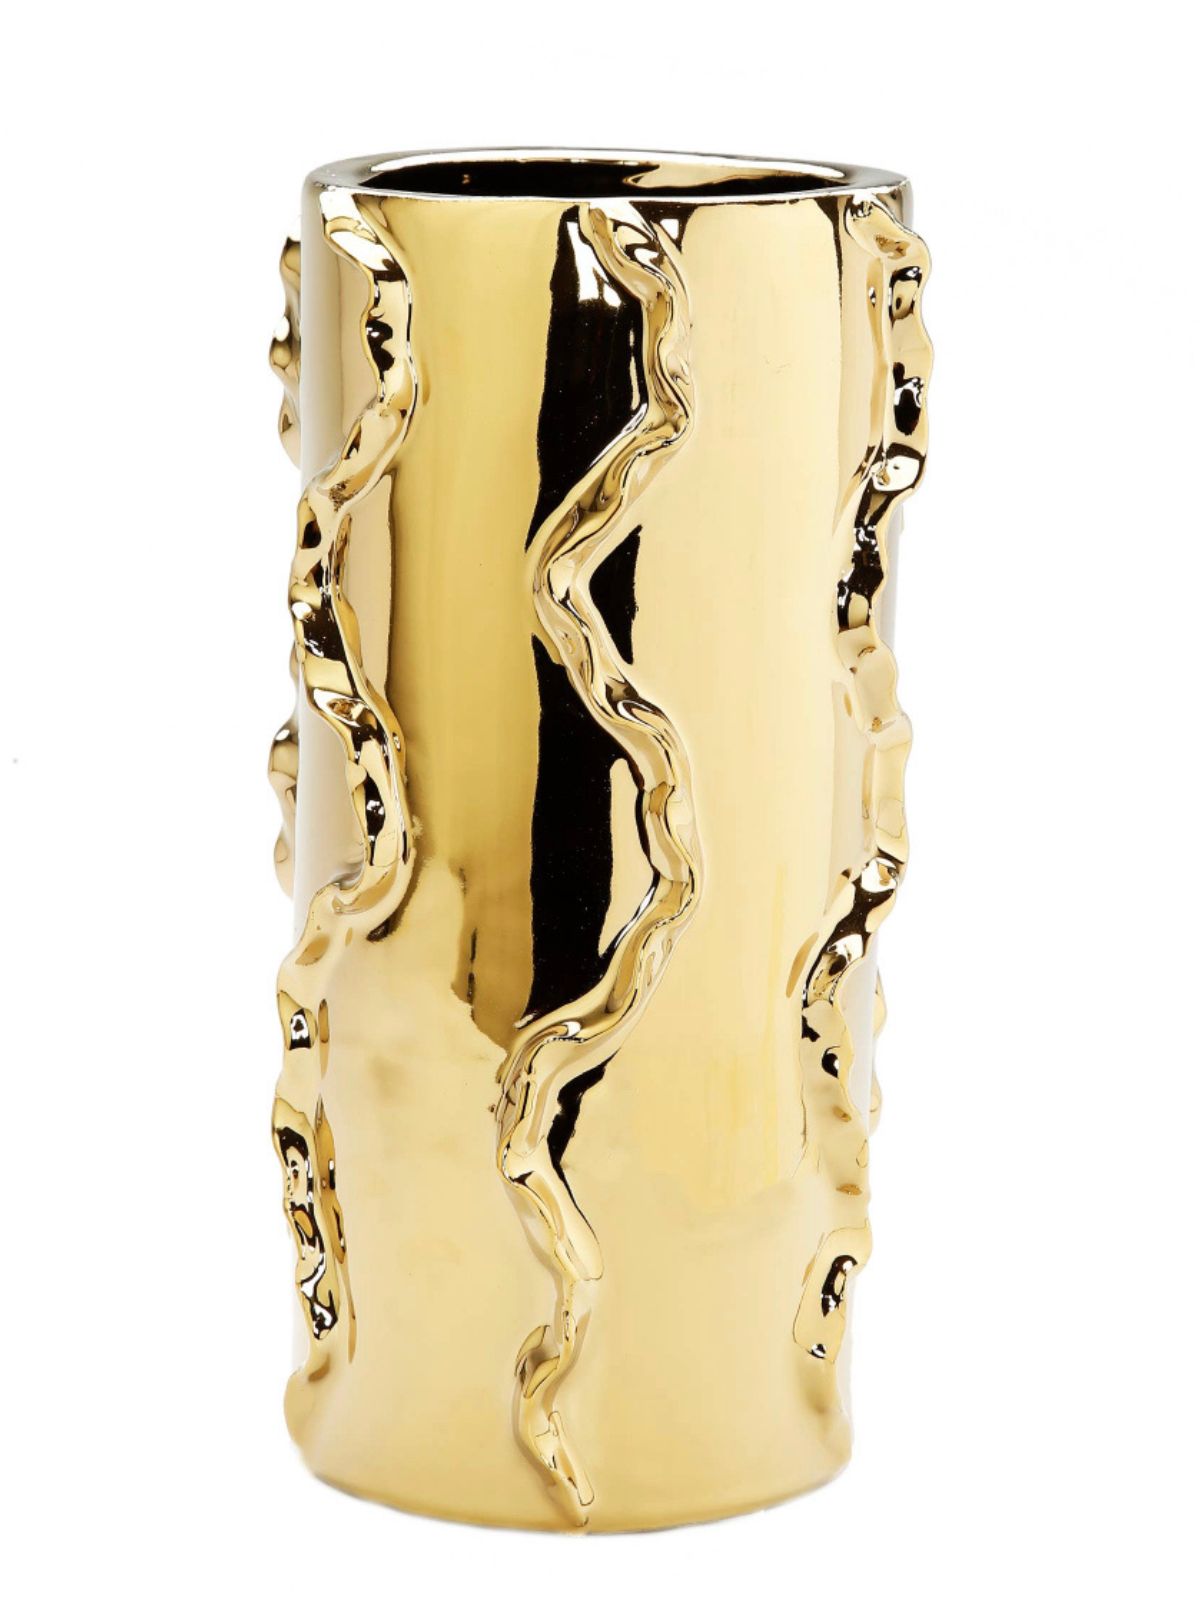 12H Gold Ceramic Decorative Vase with Luxury Ruffle Design - KYA Home Decor